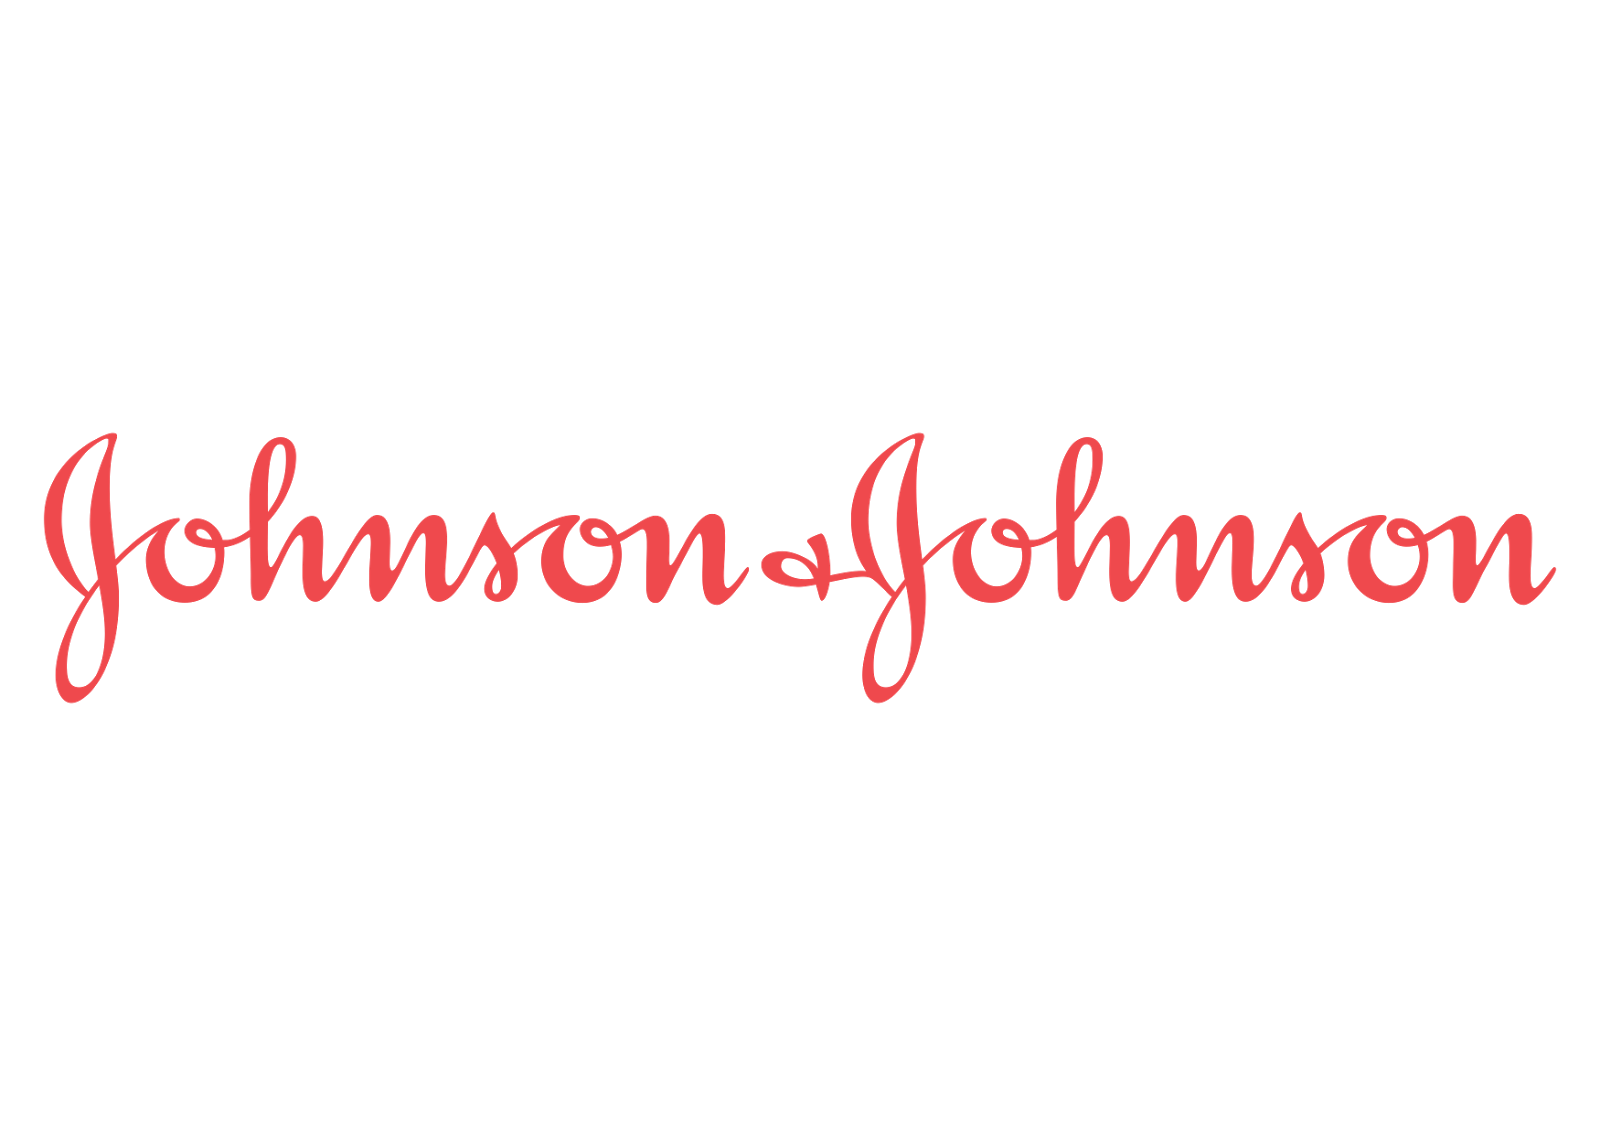 Hohnson Logo - Johnson-and-Johnson-logo-vector - Shapiro Negotiations Institute